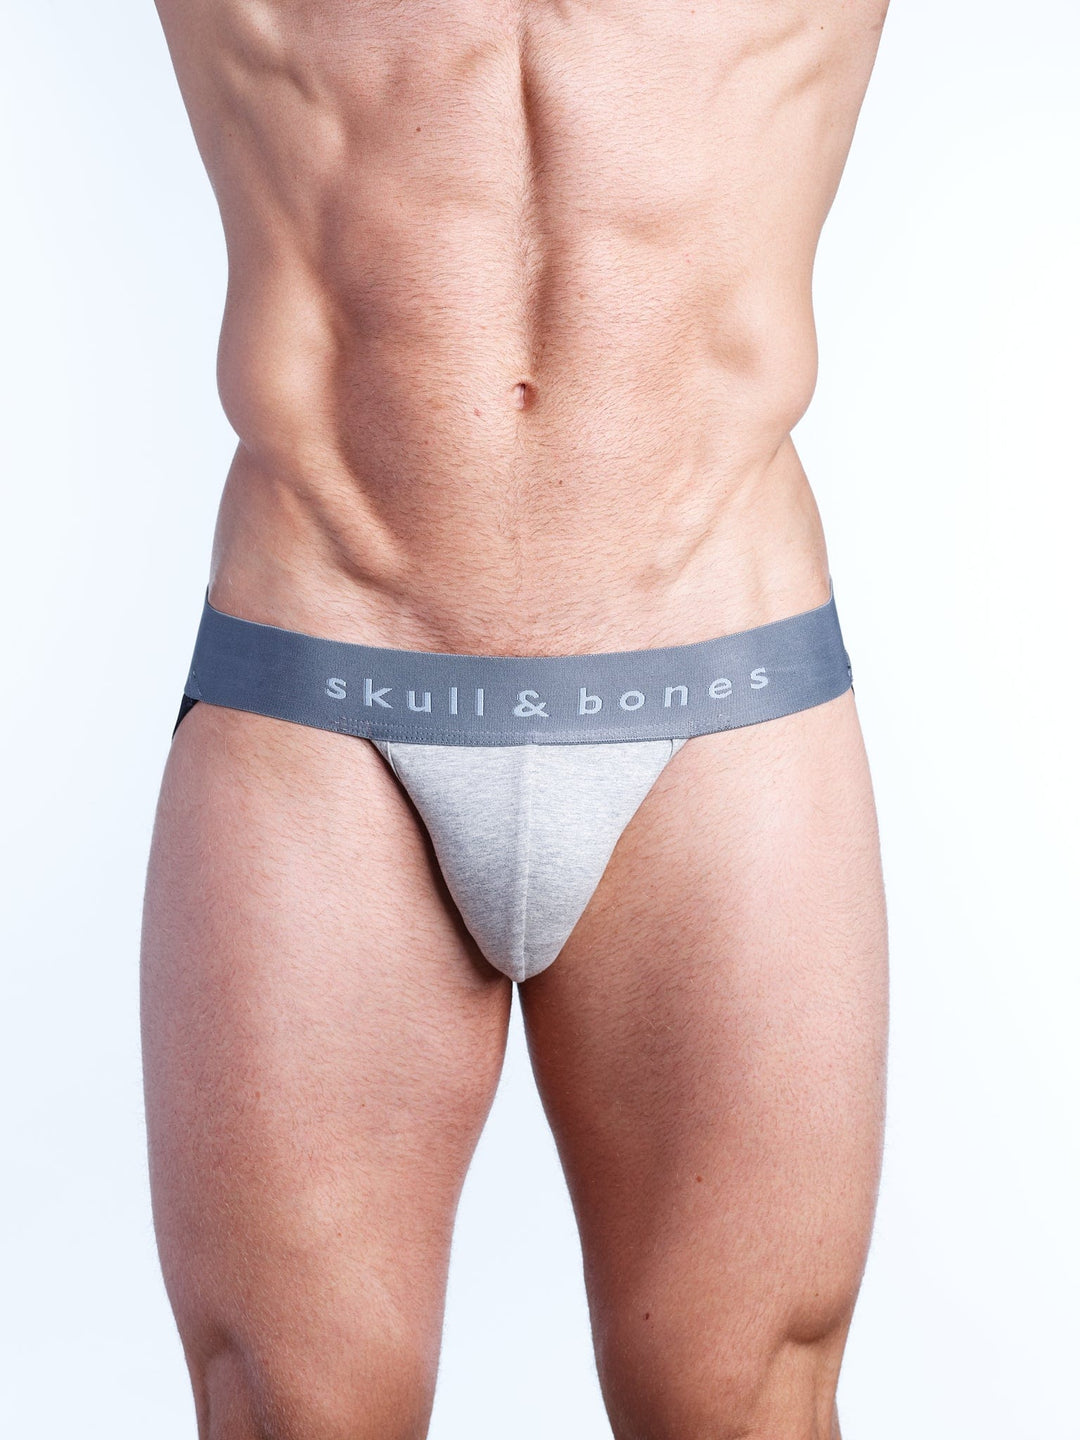 Grey Jockstrap Underwear for Men - Just the Bones Jock Grey